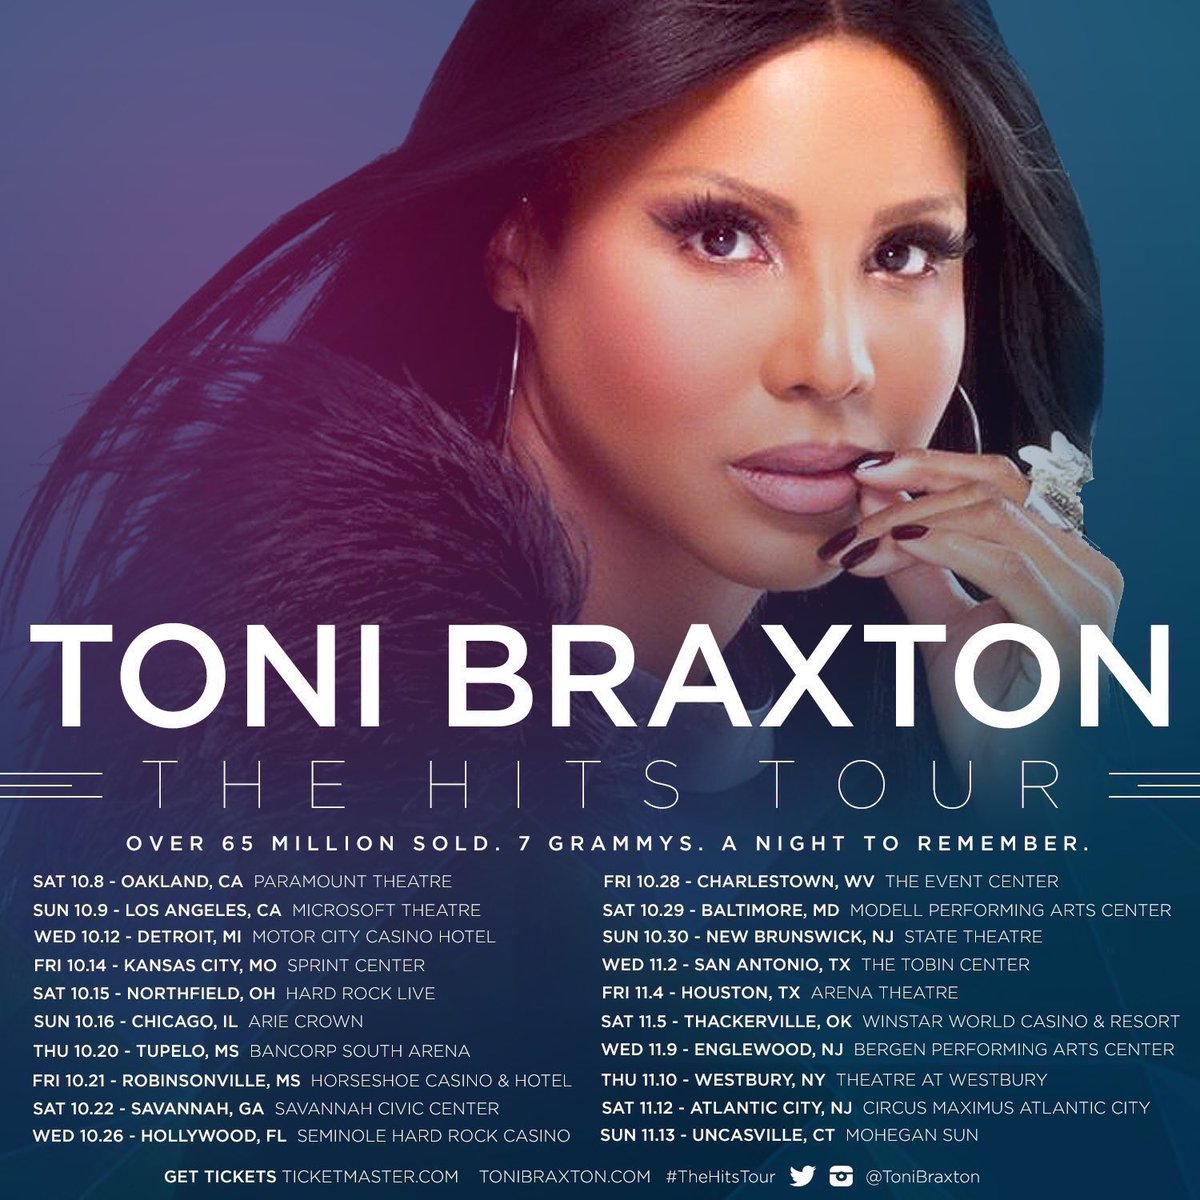 RT @BFValues: ♡ @tonibraxton's next stop on her tour #TheHitsTour is tonight in San Antonio, TX. Who's ready? https://t.co/keDhunIgh0